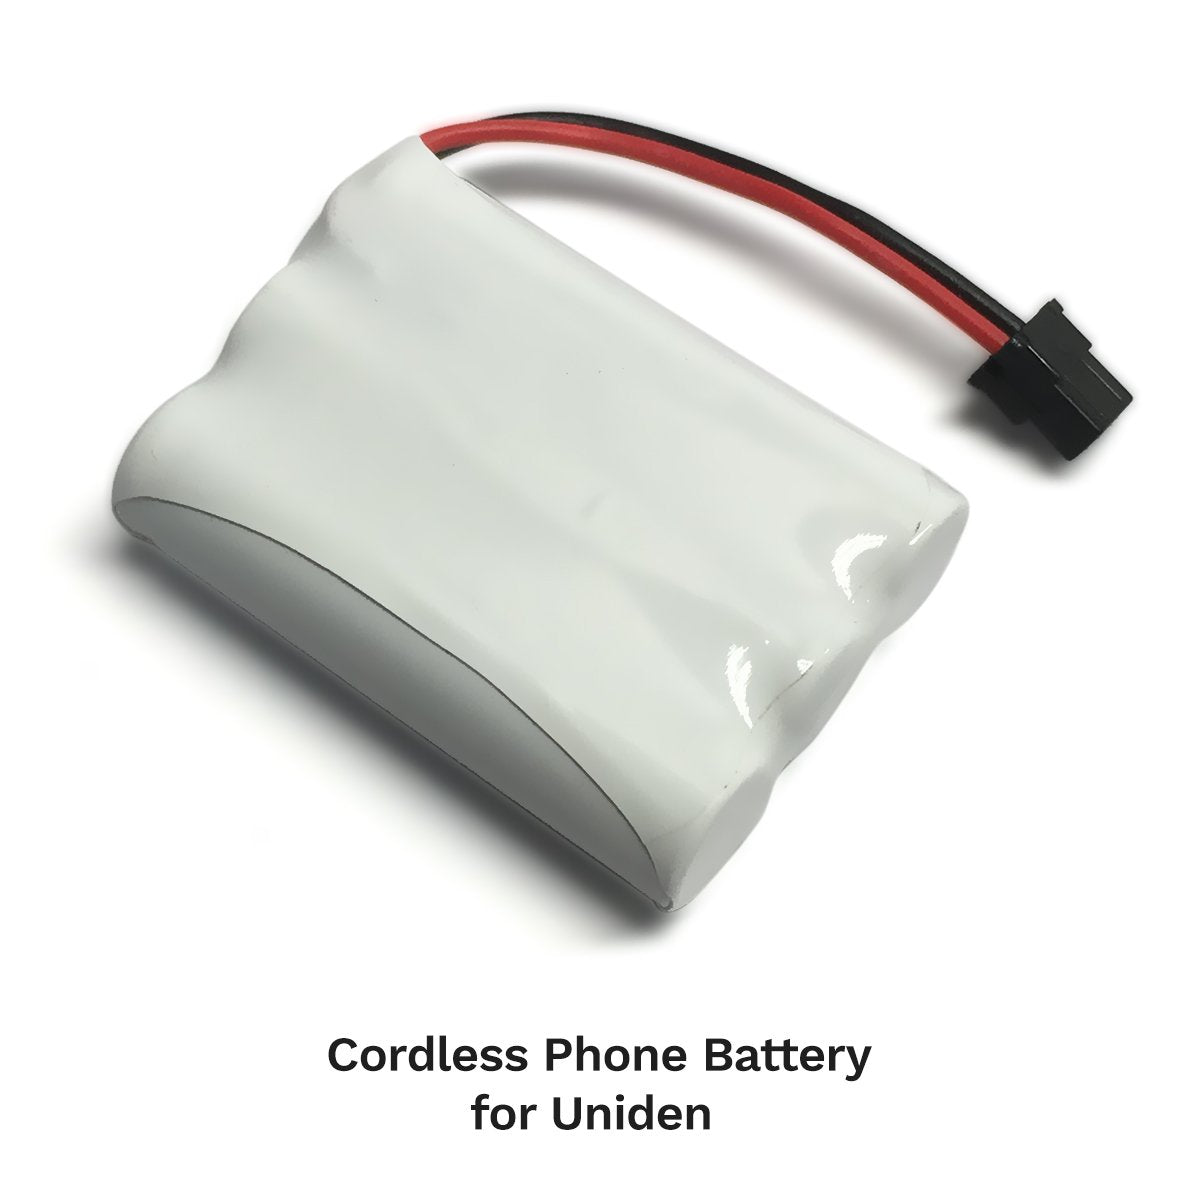 Uniden DCT738-4 Cordless Phone Battery